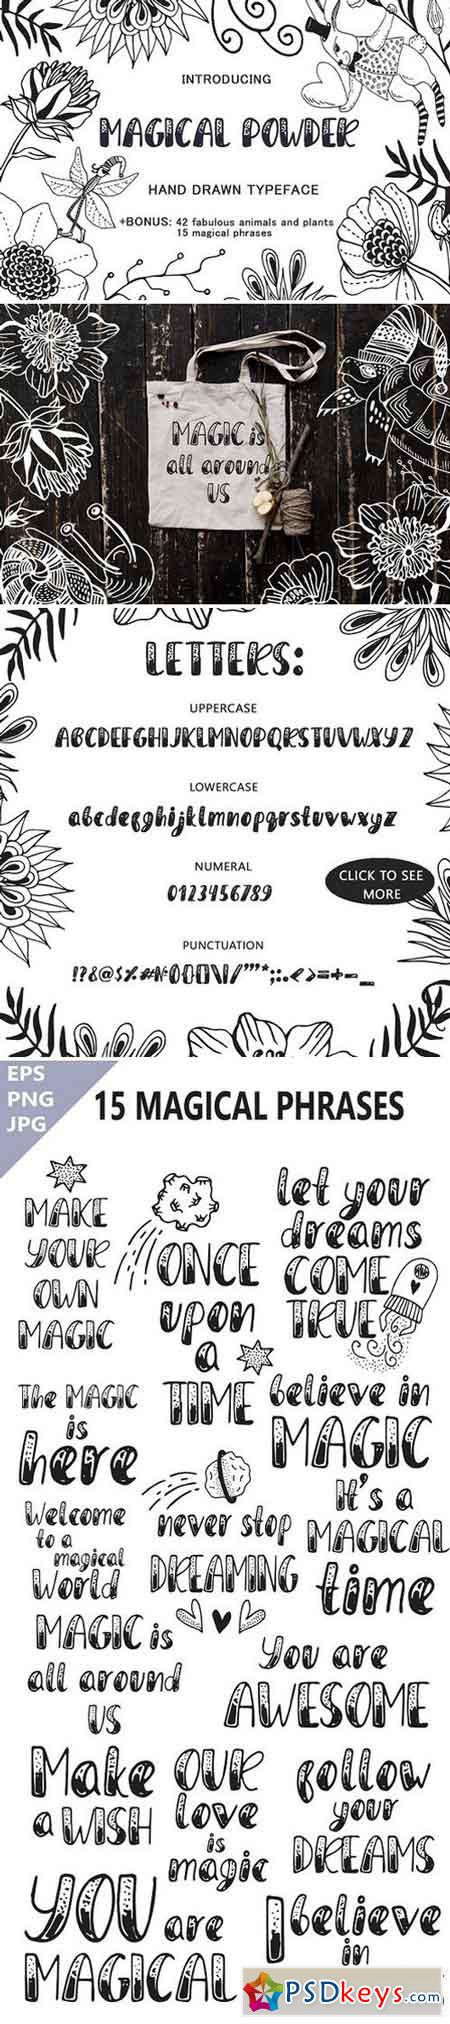 Magical Powder - typeface & elements 1792795